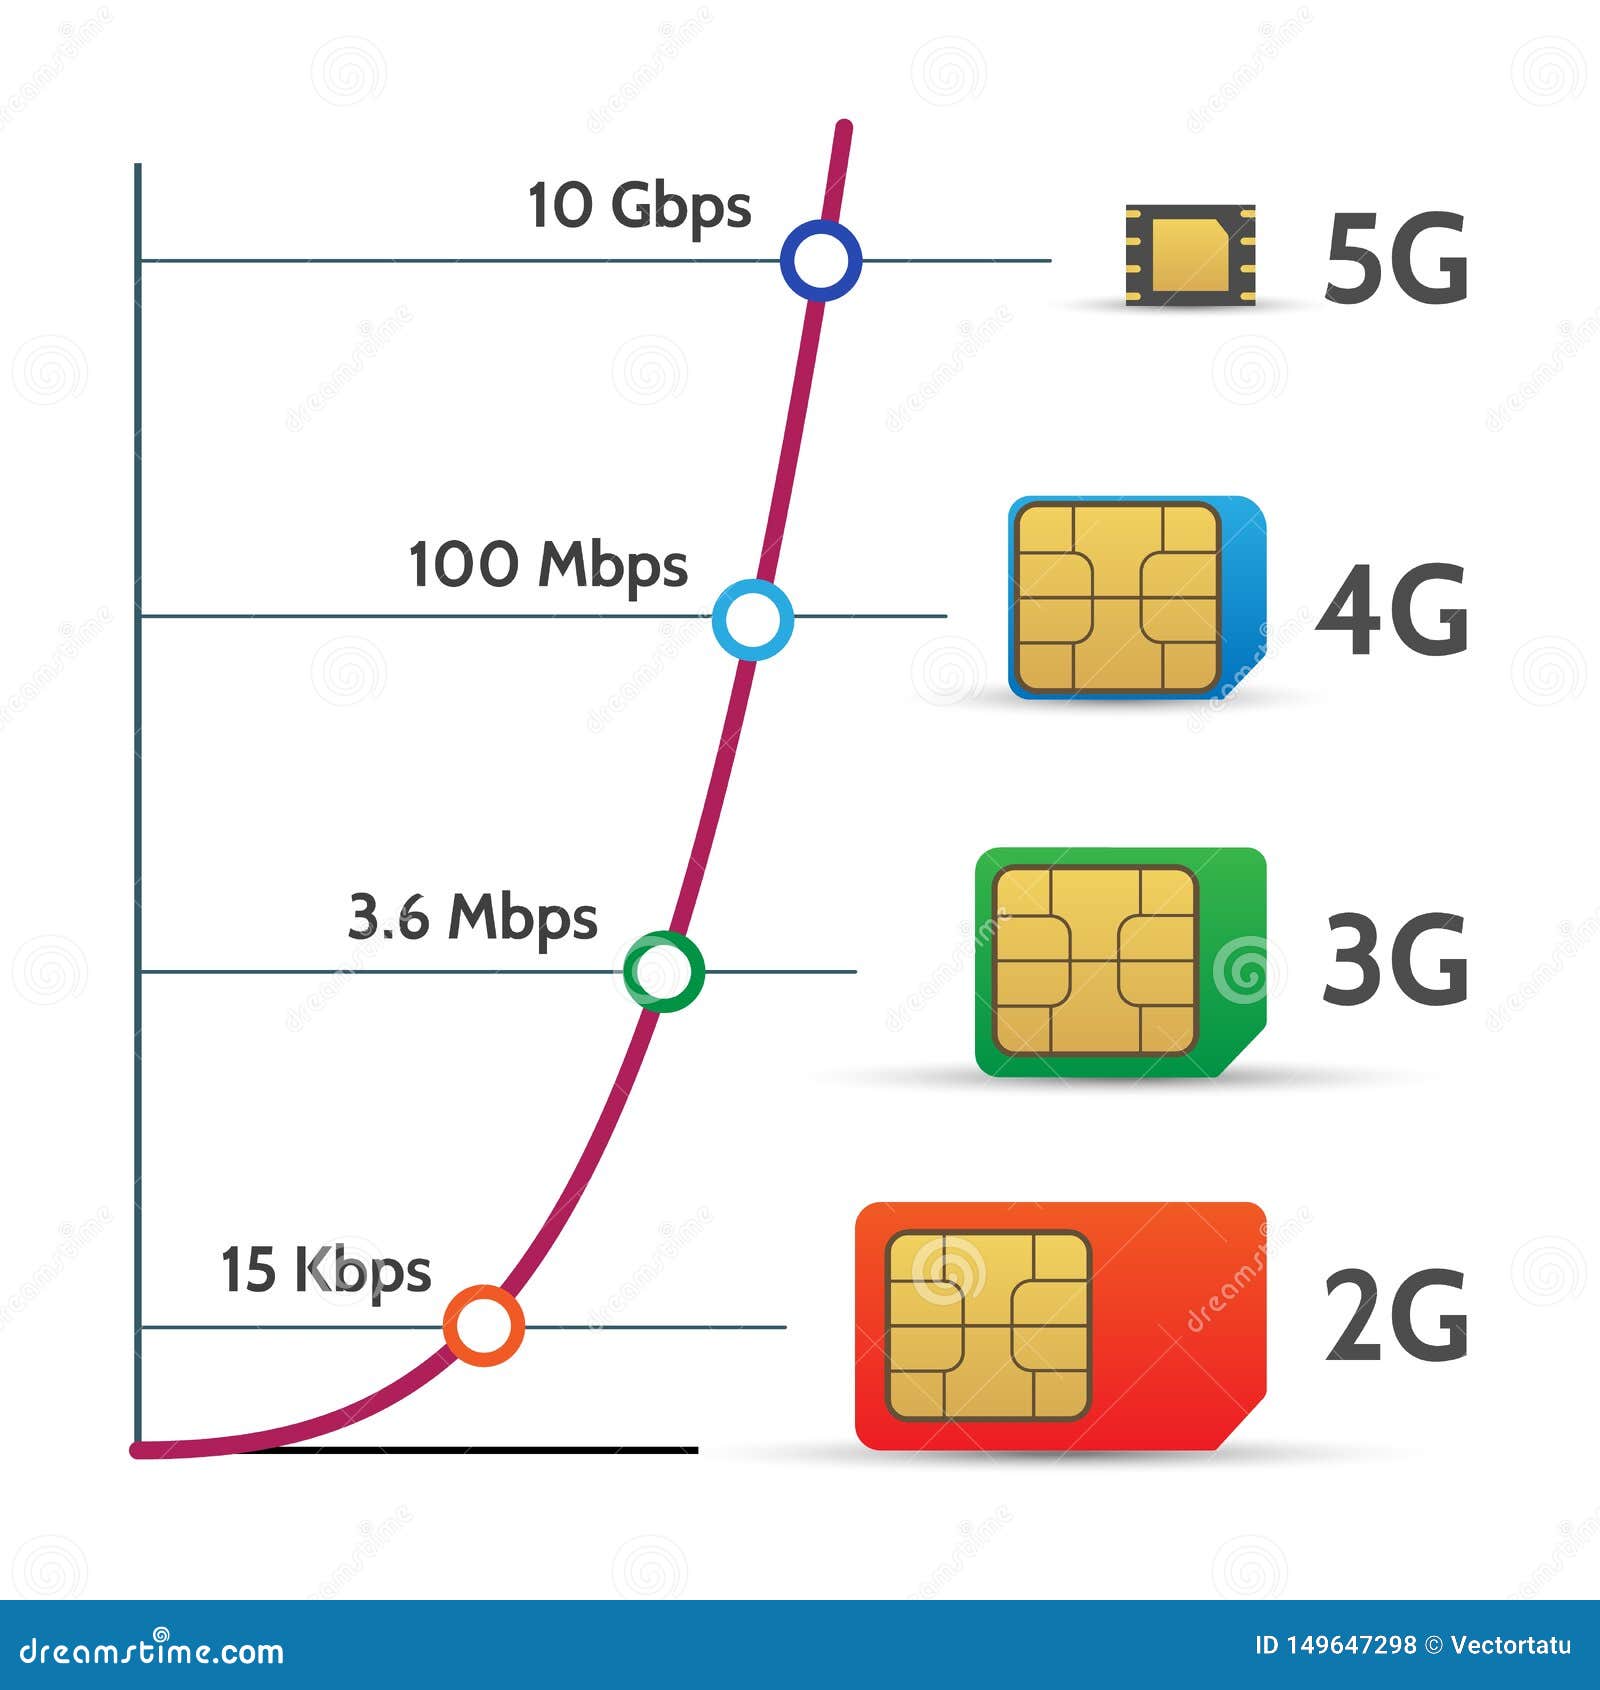 Сим карты 4 джи. SIM карта 5g. Сим карта с 5g сетью. Симка для интернета 5g. Сим карта МТС 5g.